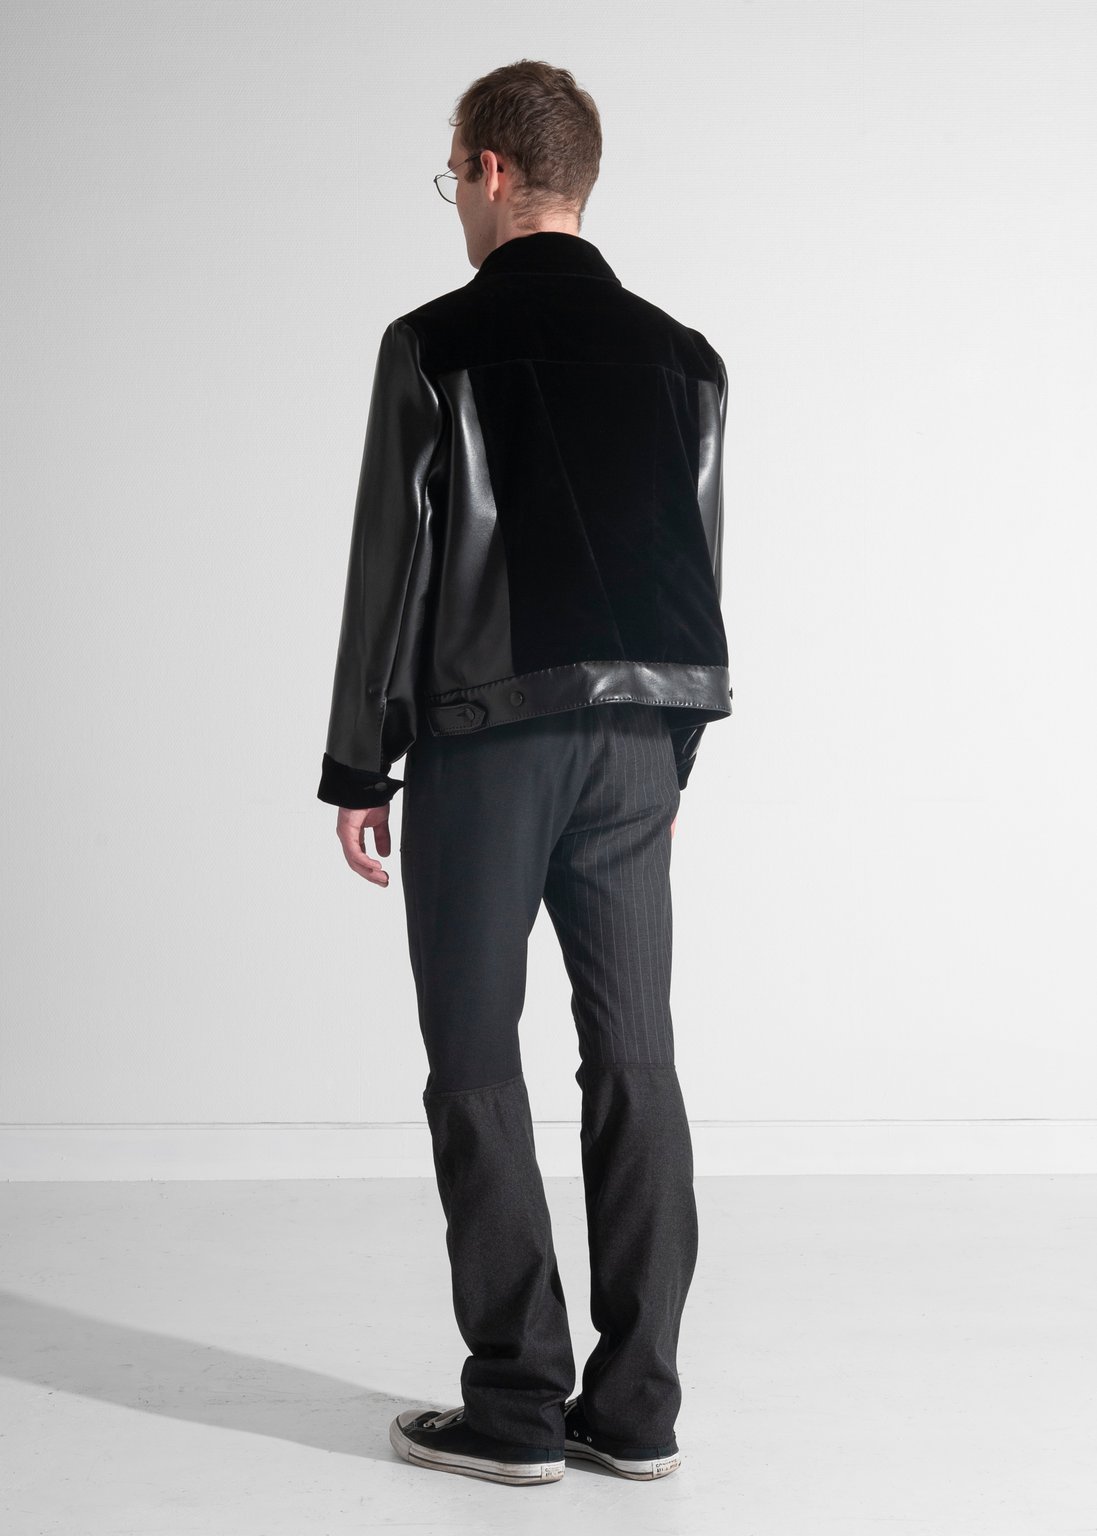 Christine Jacket veste jean noir cuir velours collectif GAMUT